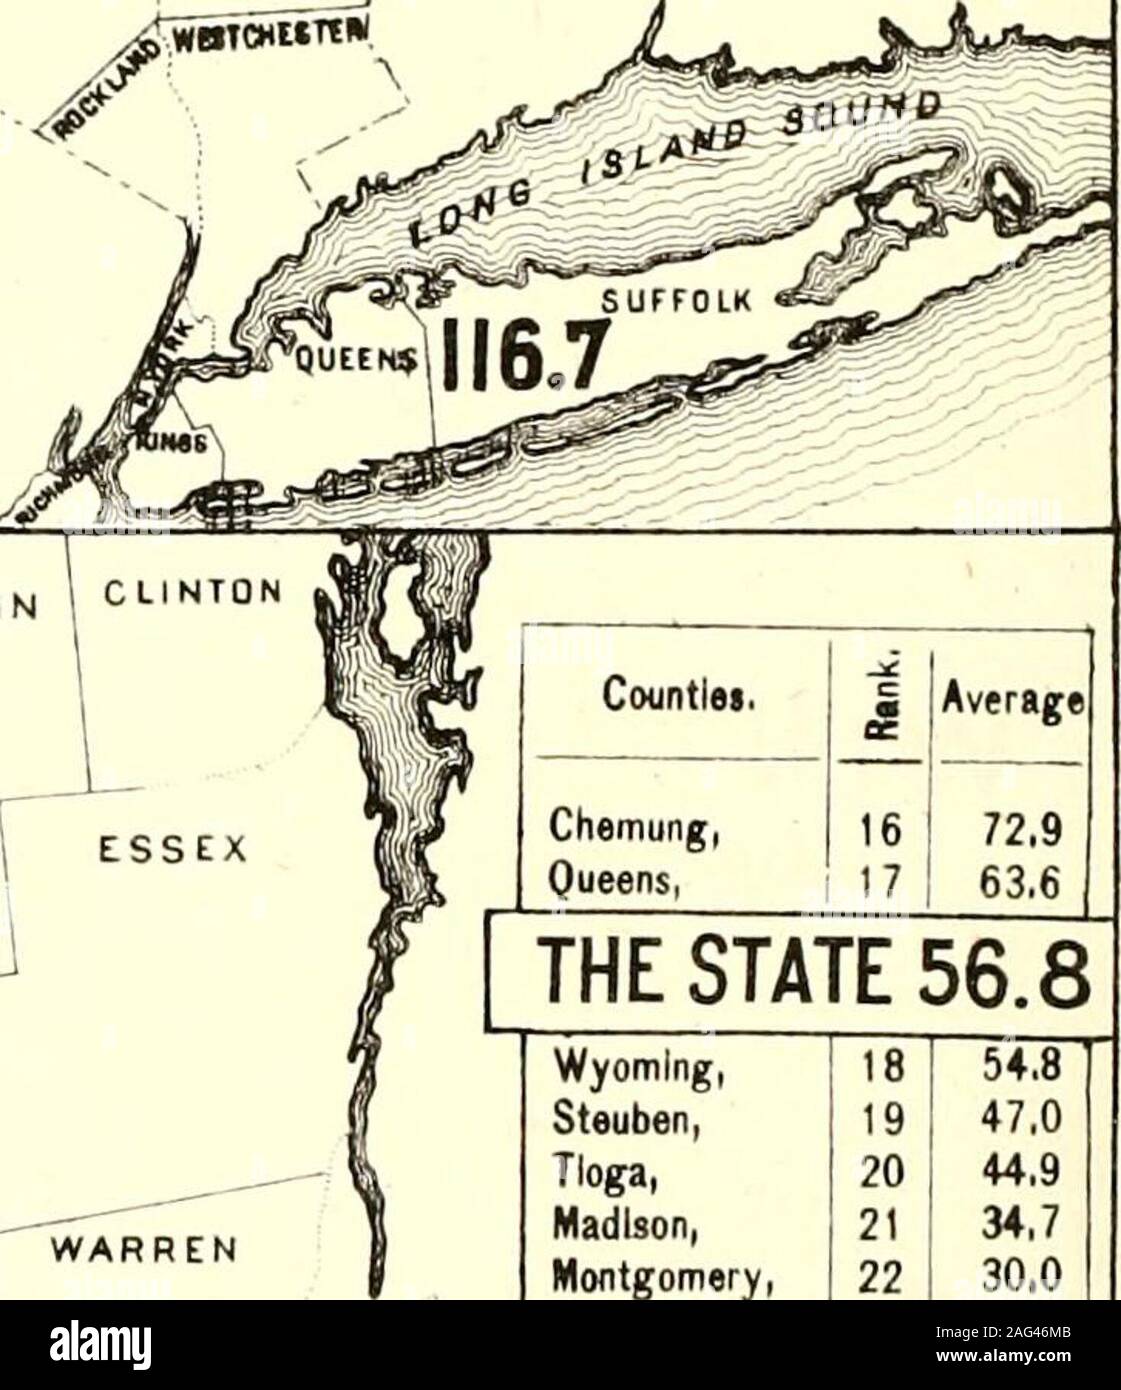 . Census of the state of New York for 1875. ULSTEB °*S^ .-SifSAM I TJie tigiii-c.i III fiiih Cvimtv .slioiv the aycrnqeninnber ofBtis/i/h- of winter wheatprothircrJ i/i thdfComitv to each JOO^icff.s- o/i/iiprofCf/Ldiiff. Ala// yo / tontaui.i t/if /J Counlie.v having thehighest rnnix- hi re.s-pert to thnt average.Mcrp No.Z.the /J(haiitie.s- iie^t in raiih &r.. RATIO OF WINTER WHEAT PRODUCED IN 1874 TO THE ACREAGE OF IMPROVED LAND Stock Photo